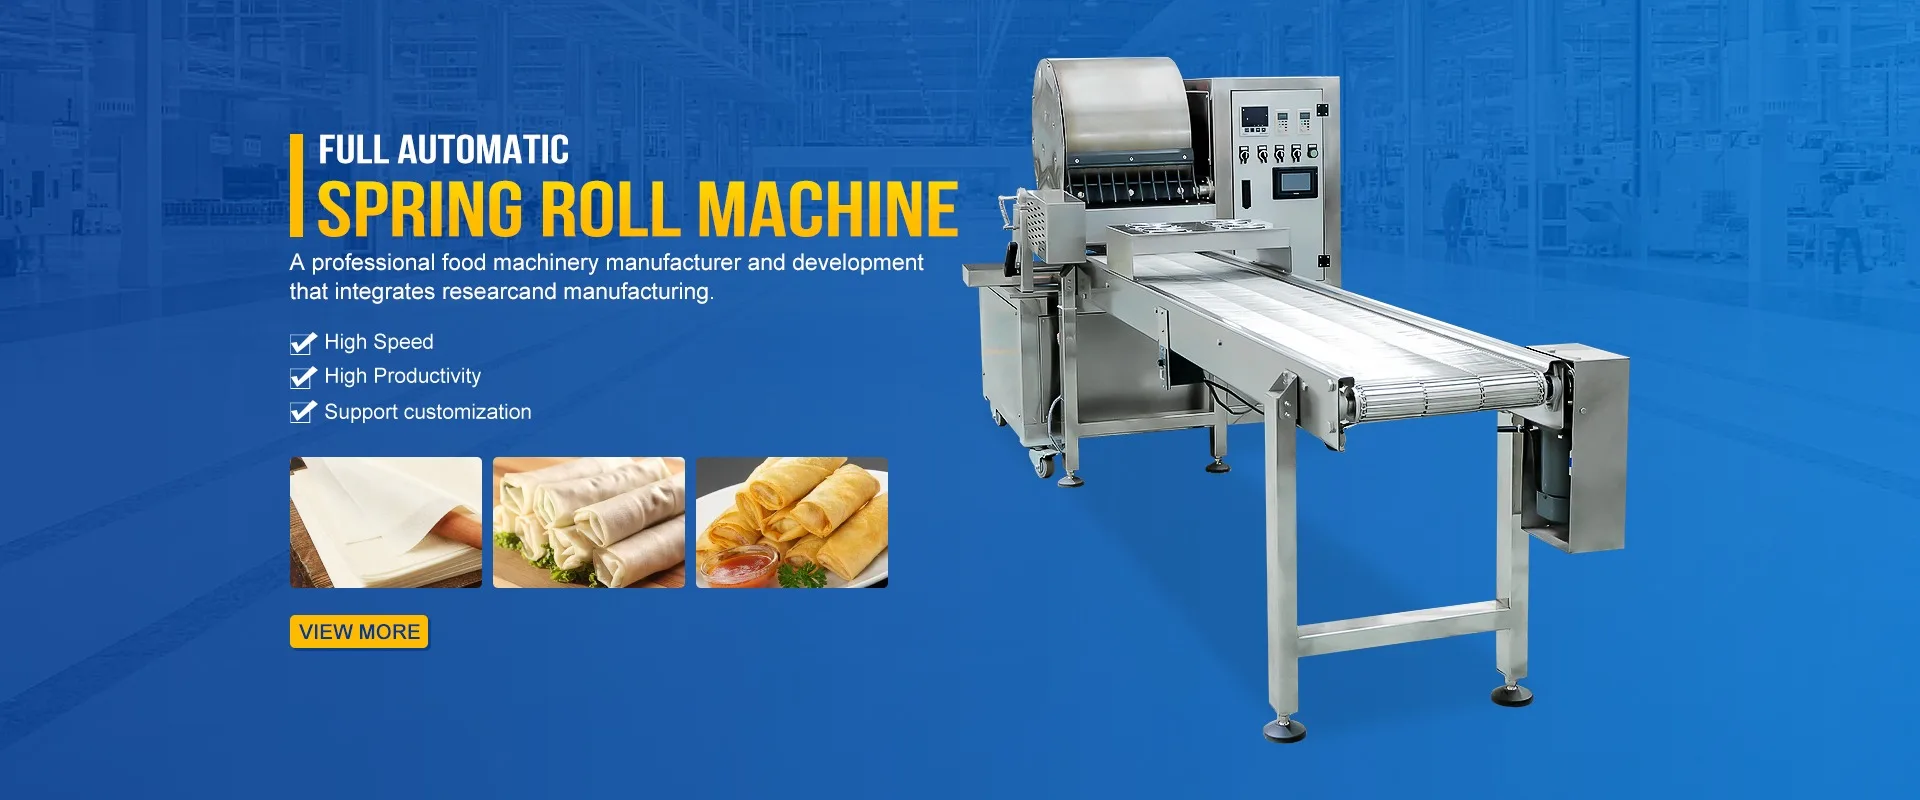 spring roll machine